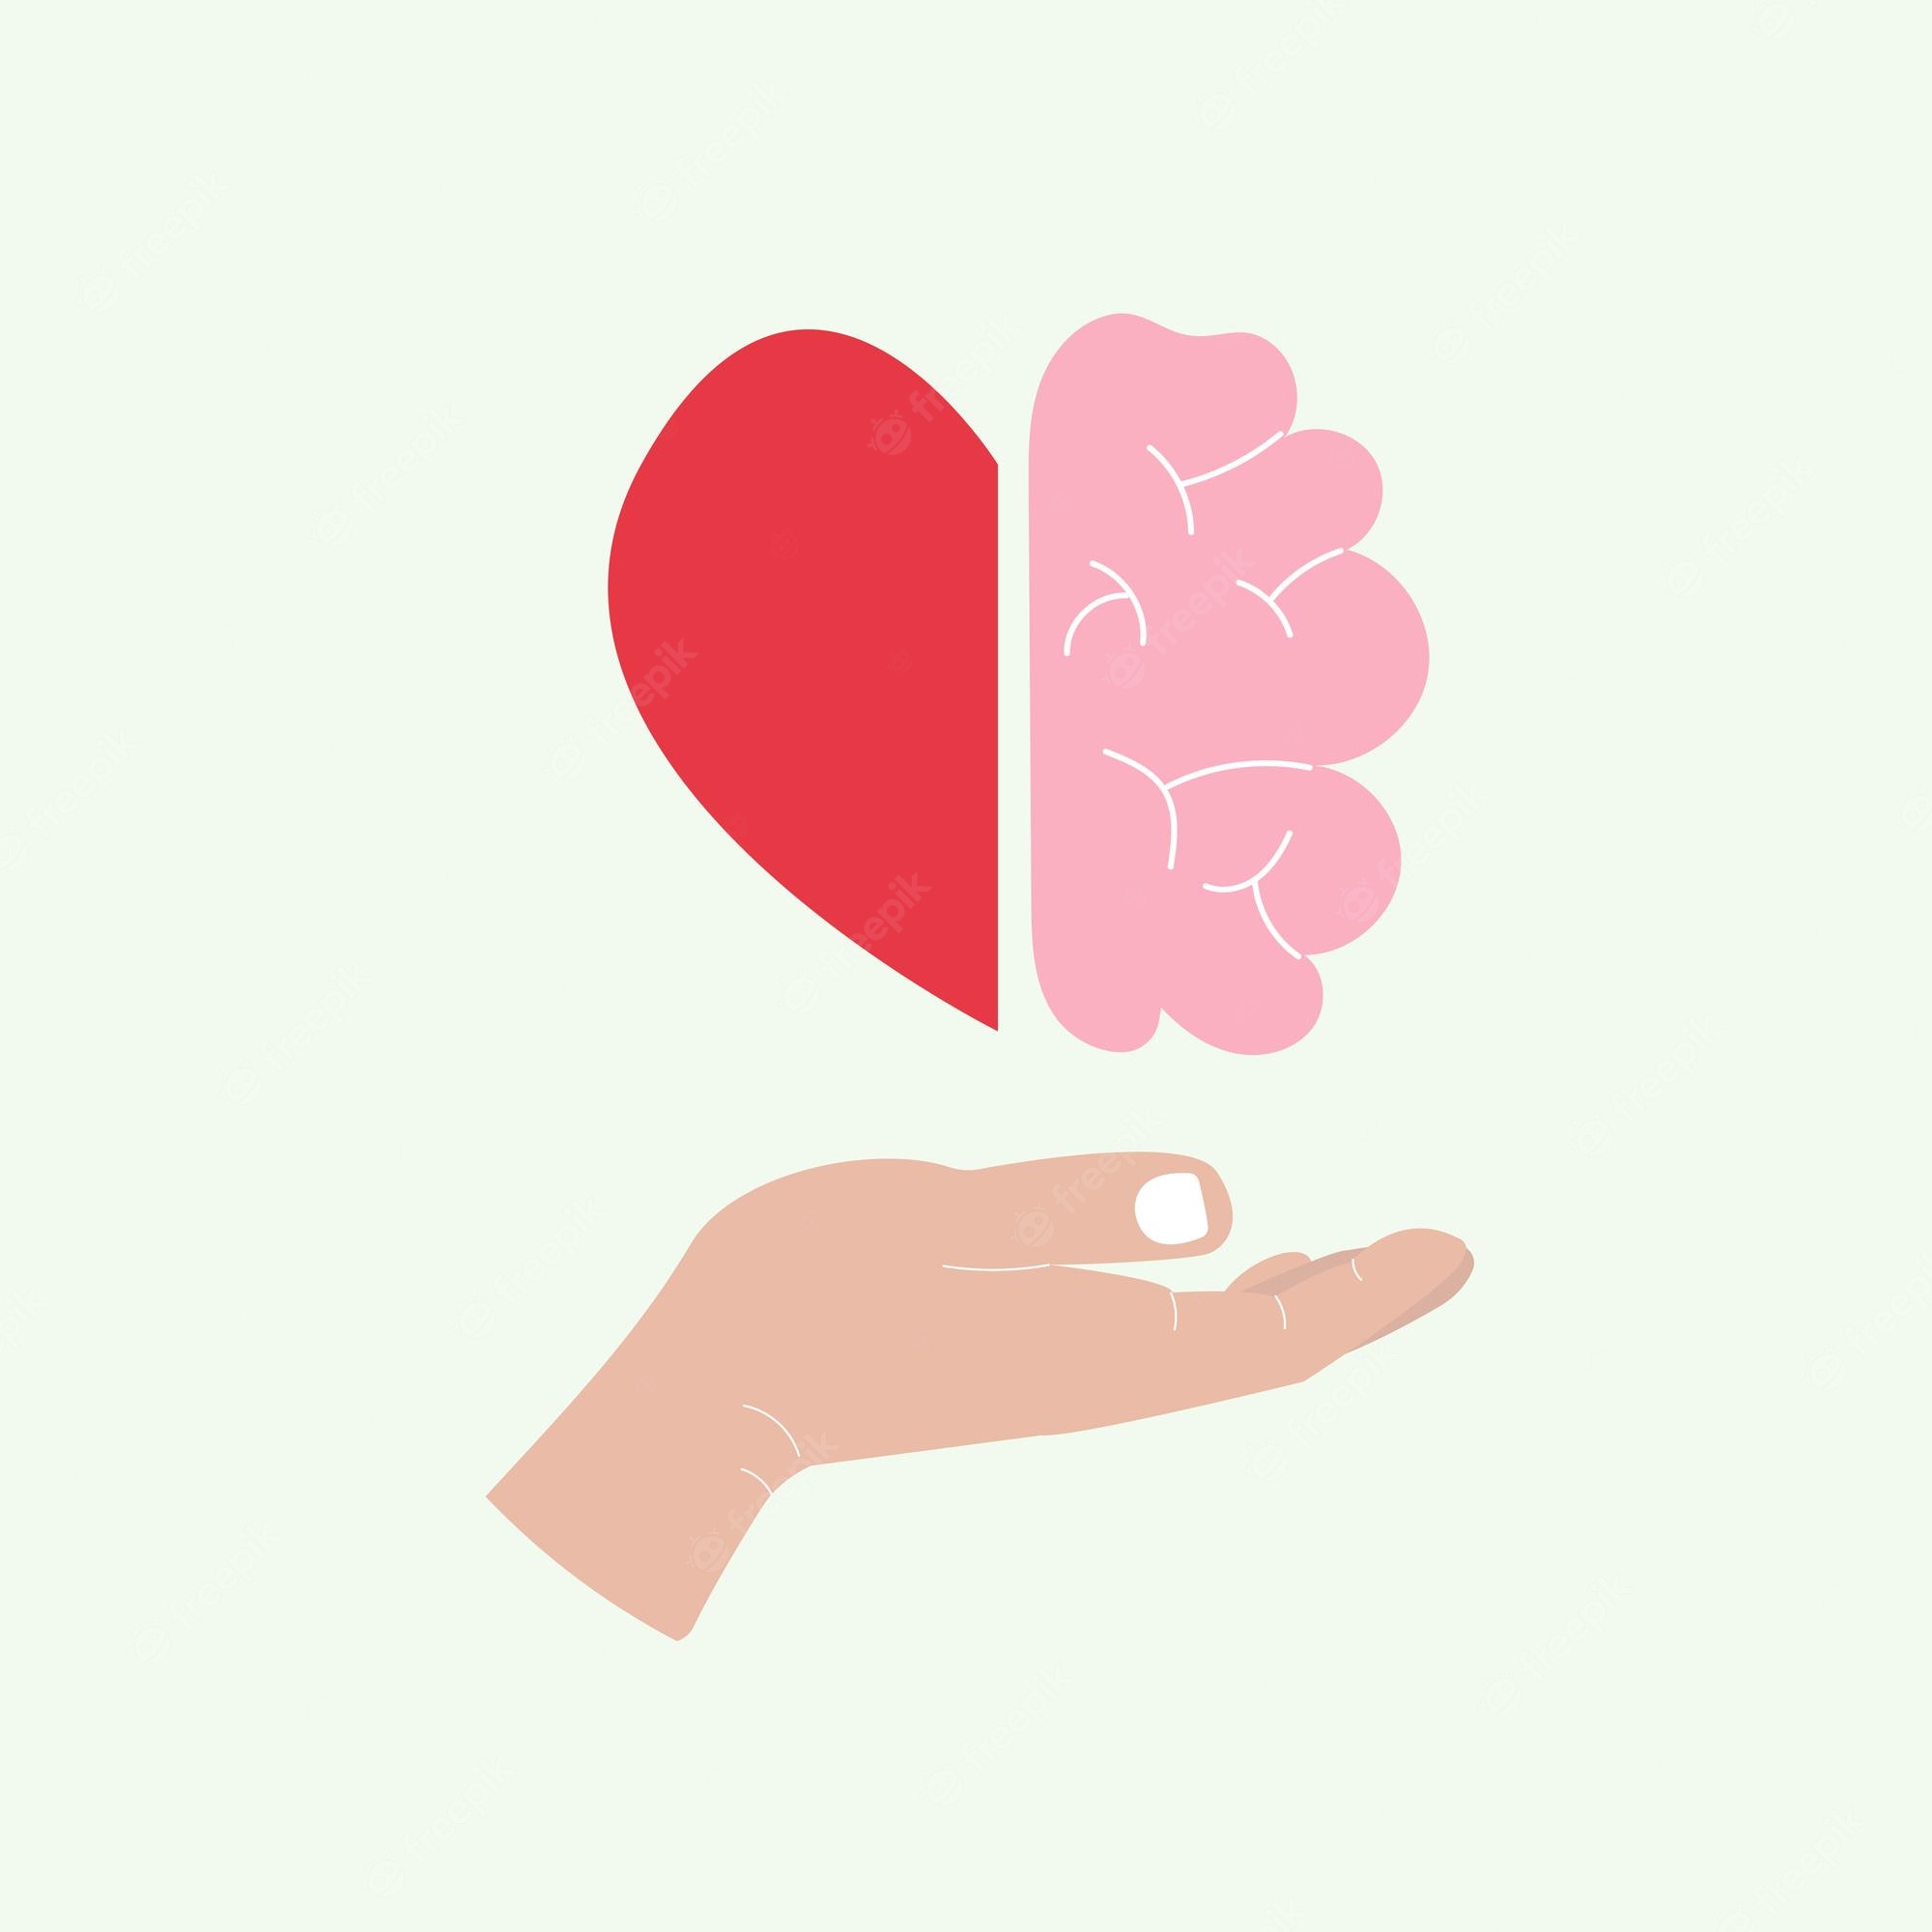 Heart Brain Image